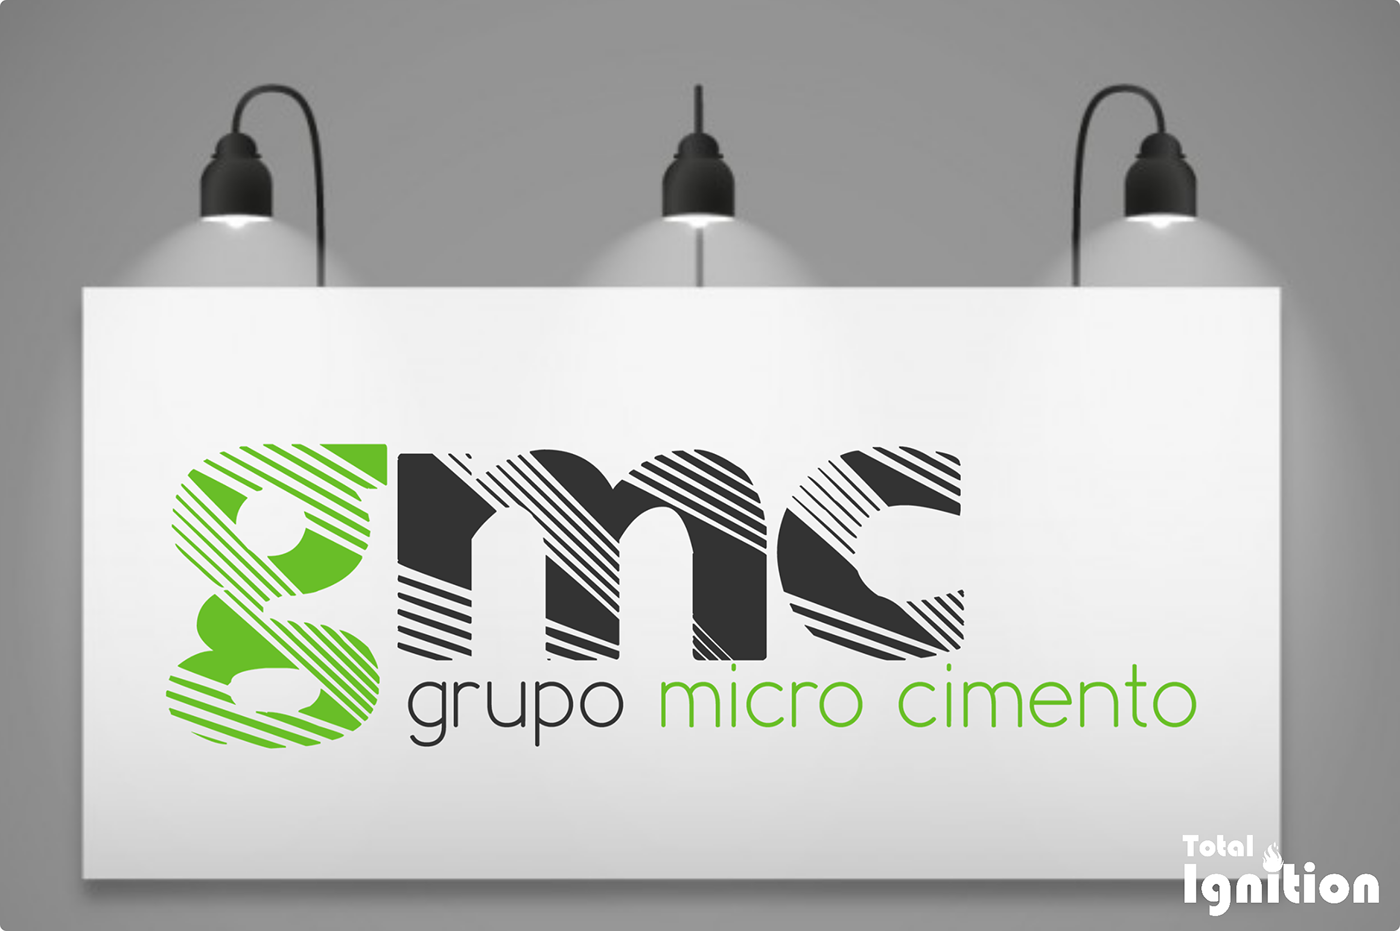 micro cimento concrete ceará Brasil logo design business cards green gray modern FLOOR company